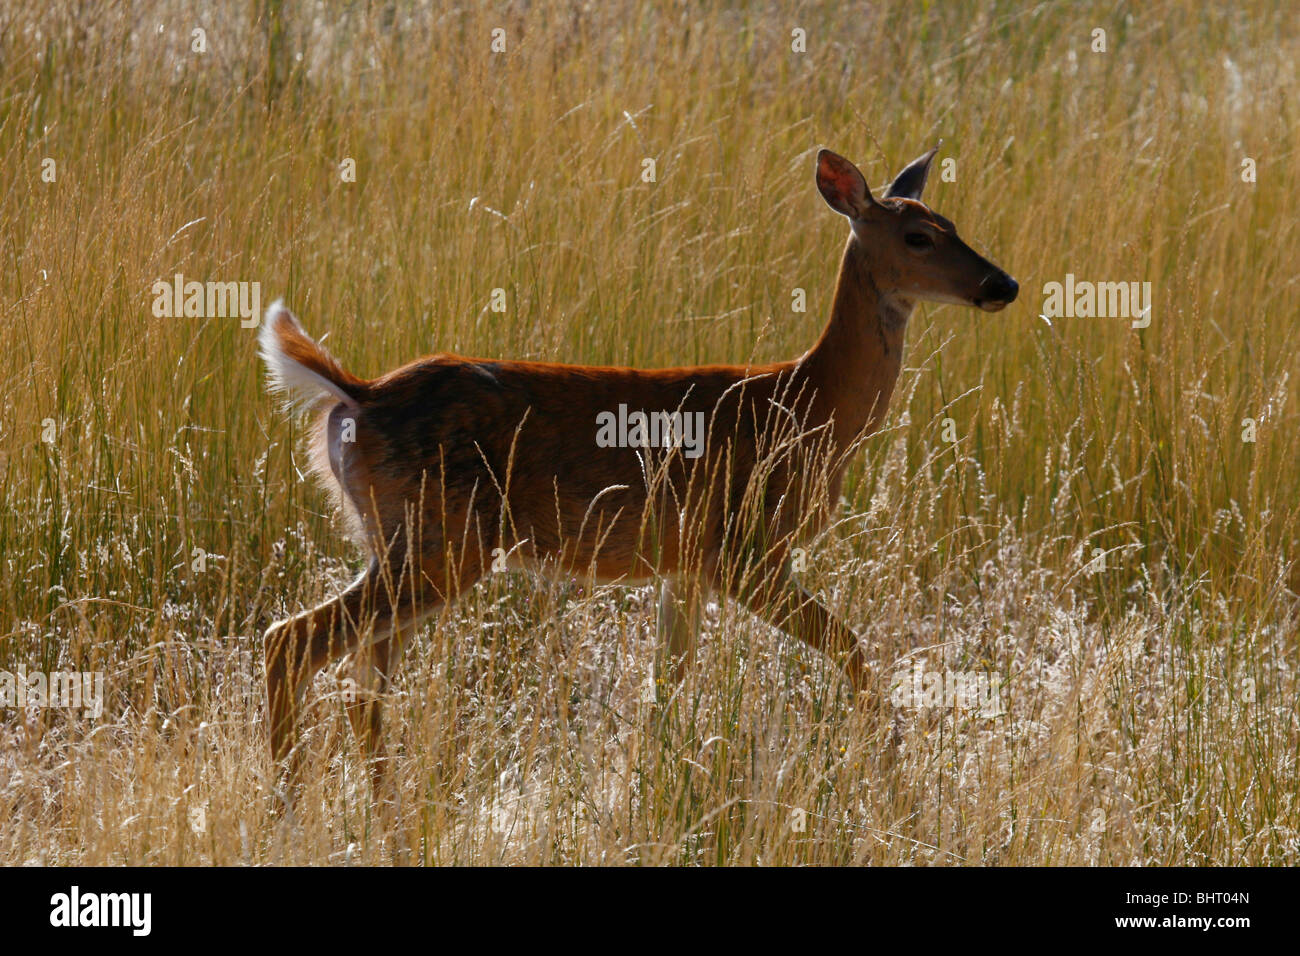 Whitetail Doe in Grassy Field Stock Photo